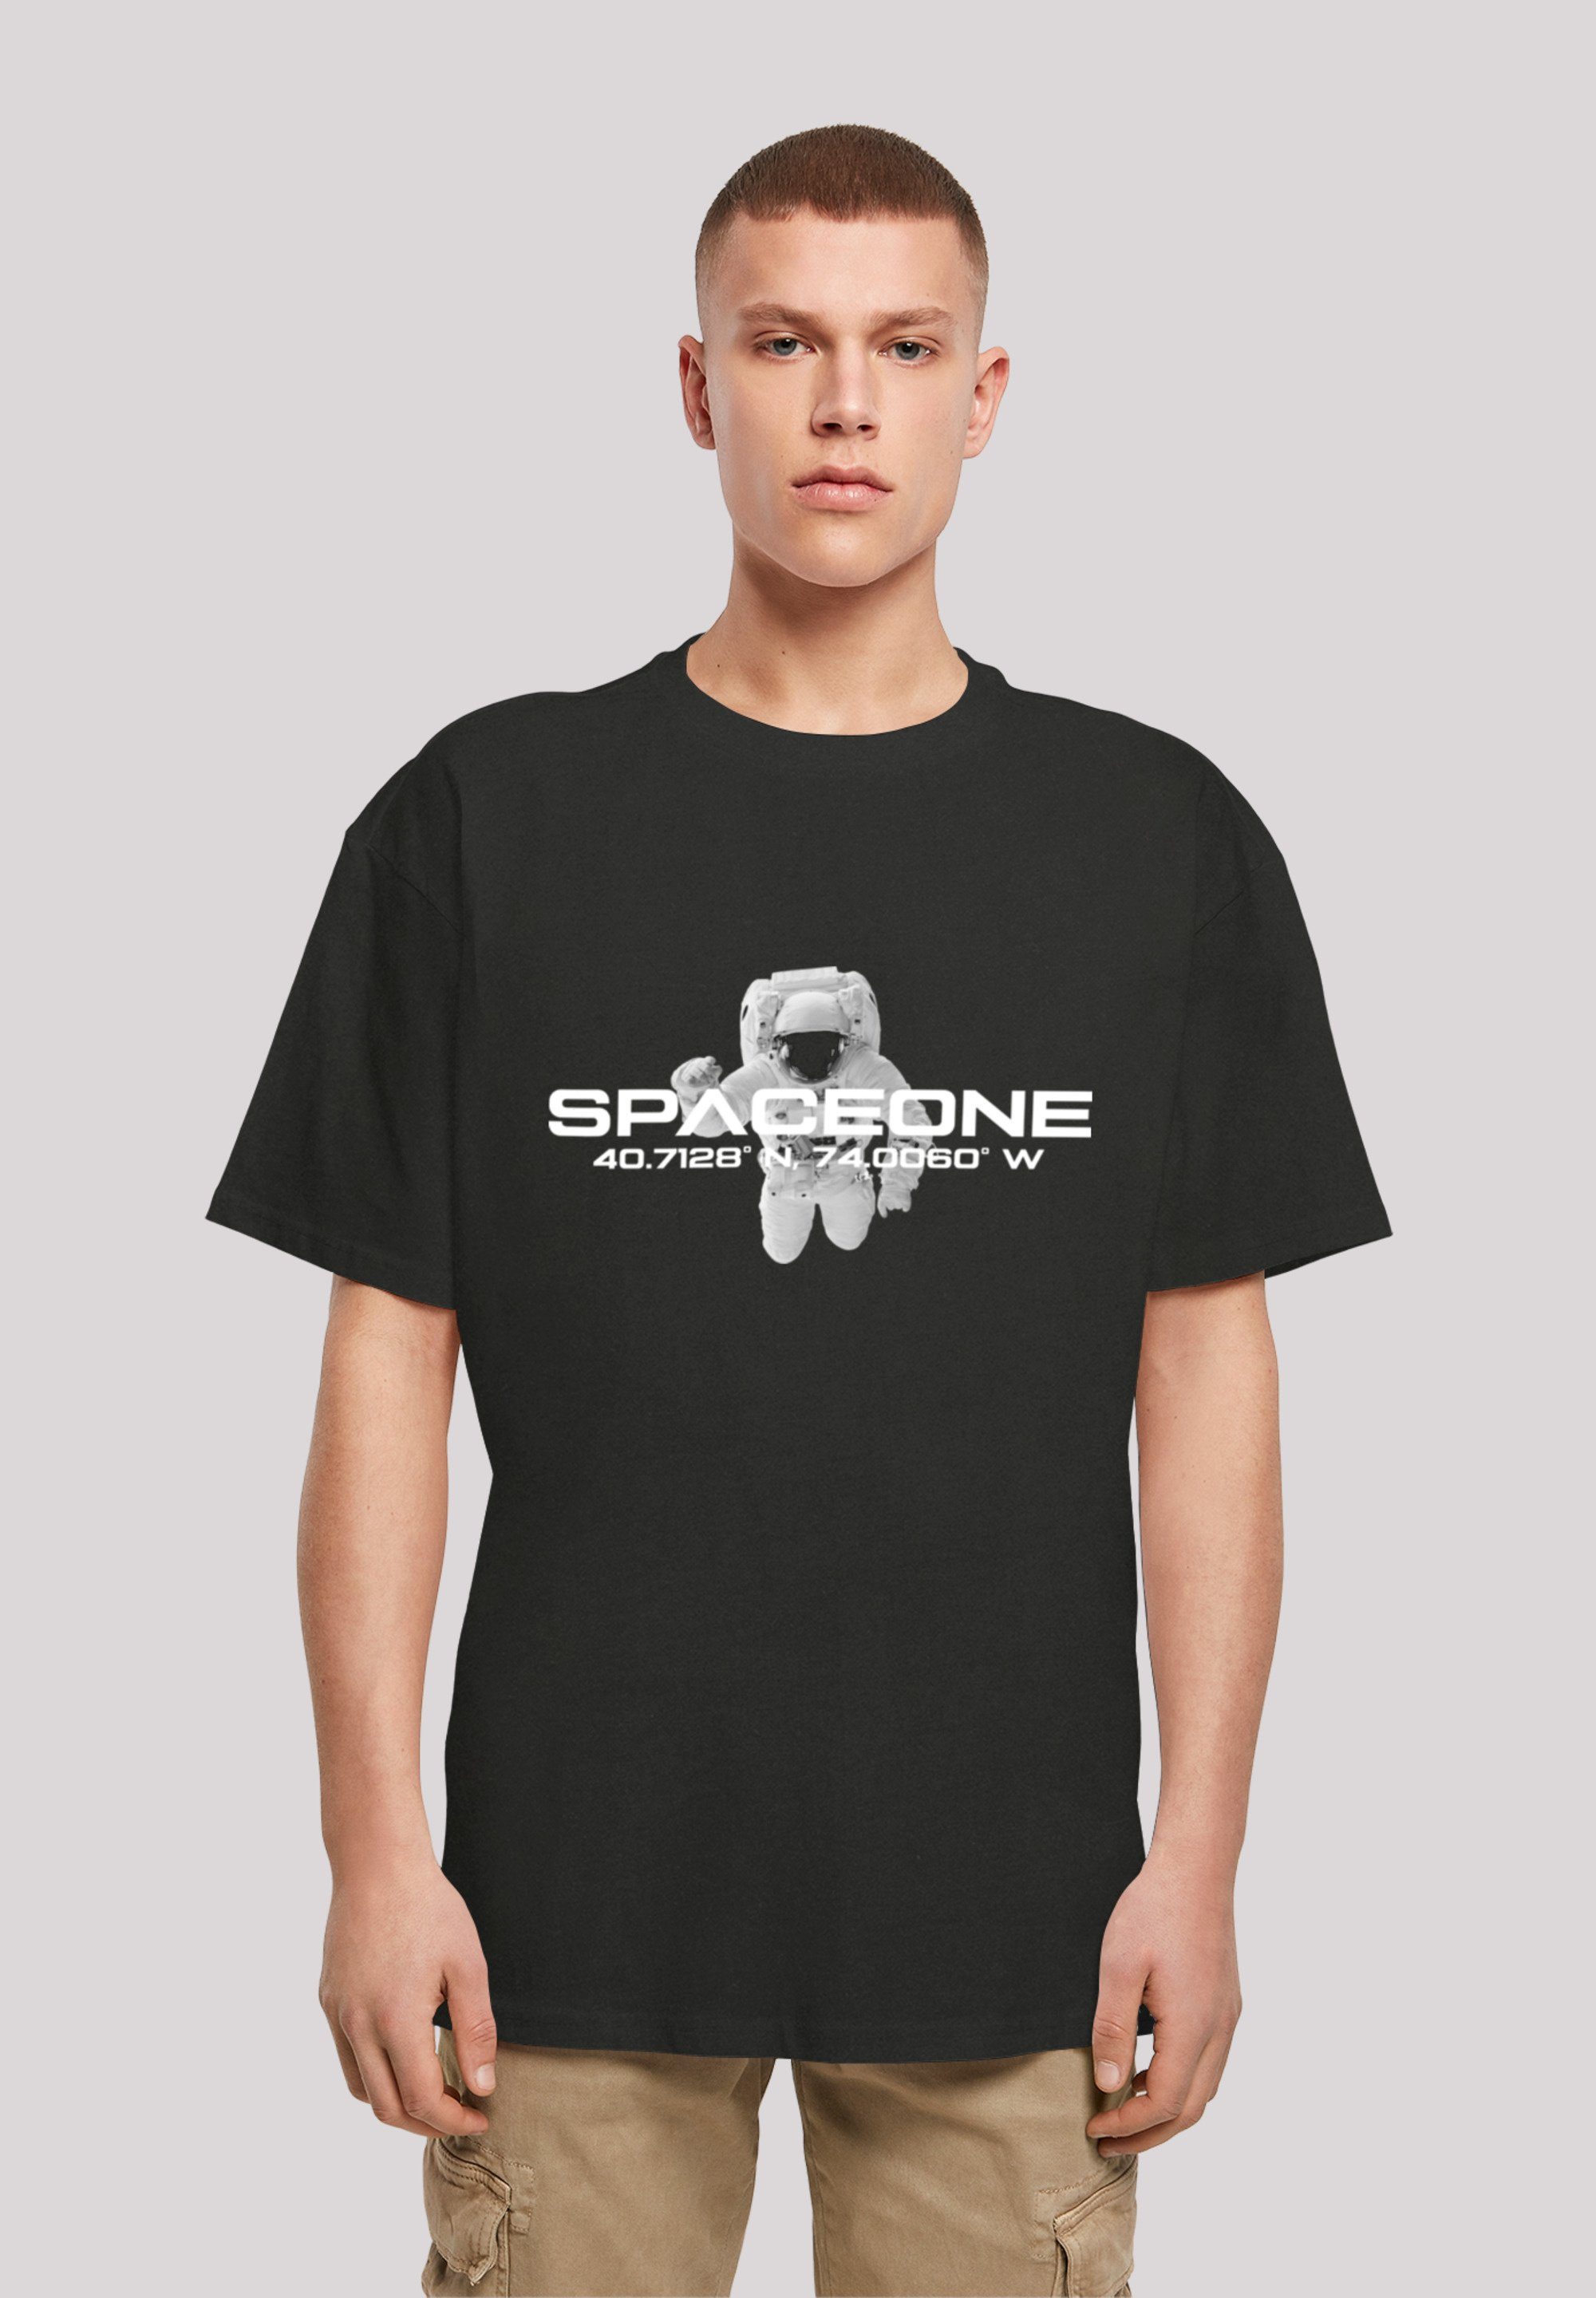 F4NT4STIC T-Shirt PHIBER SpaceOne Astronaut Print schwarz